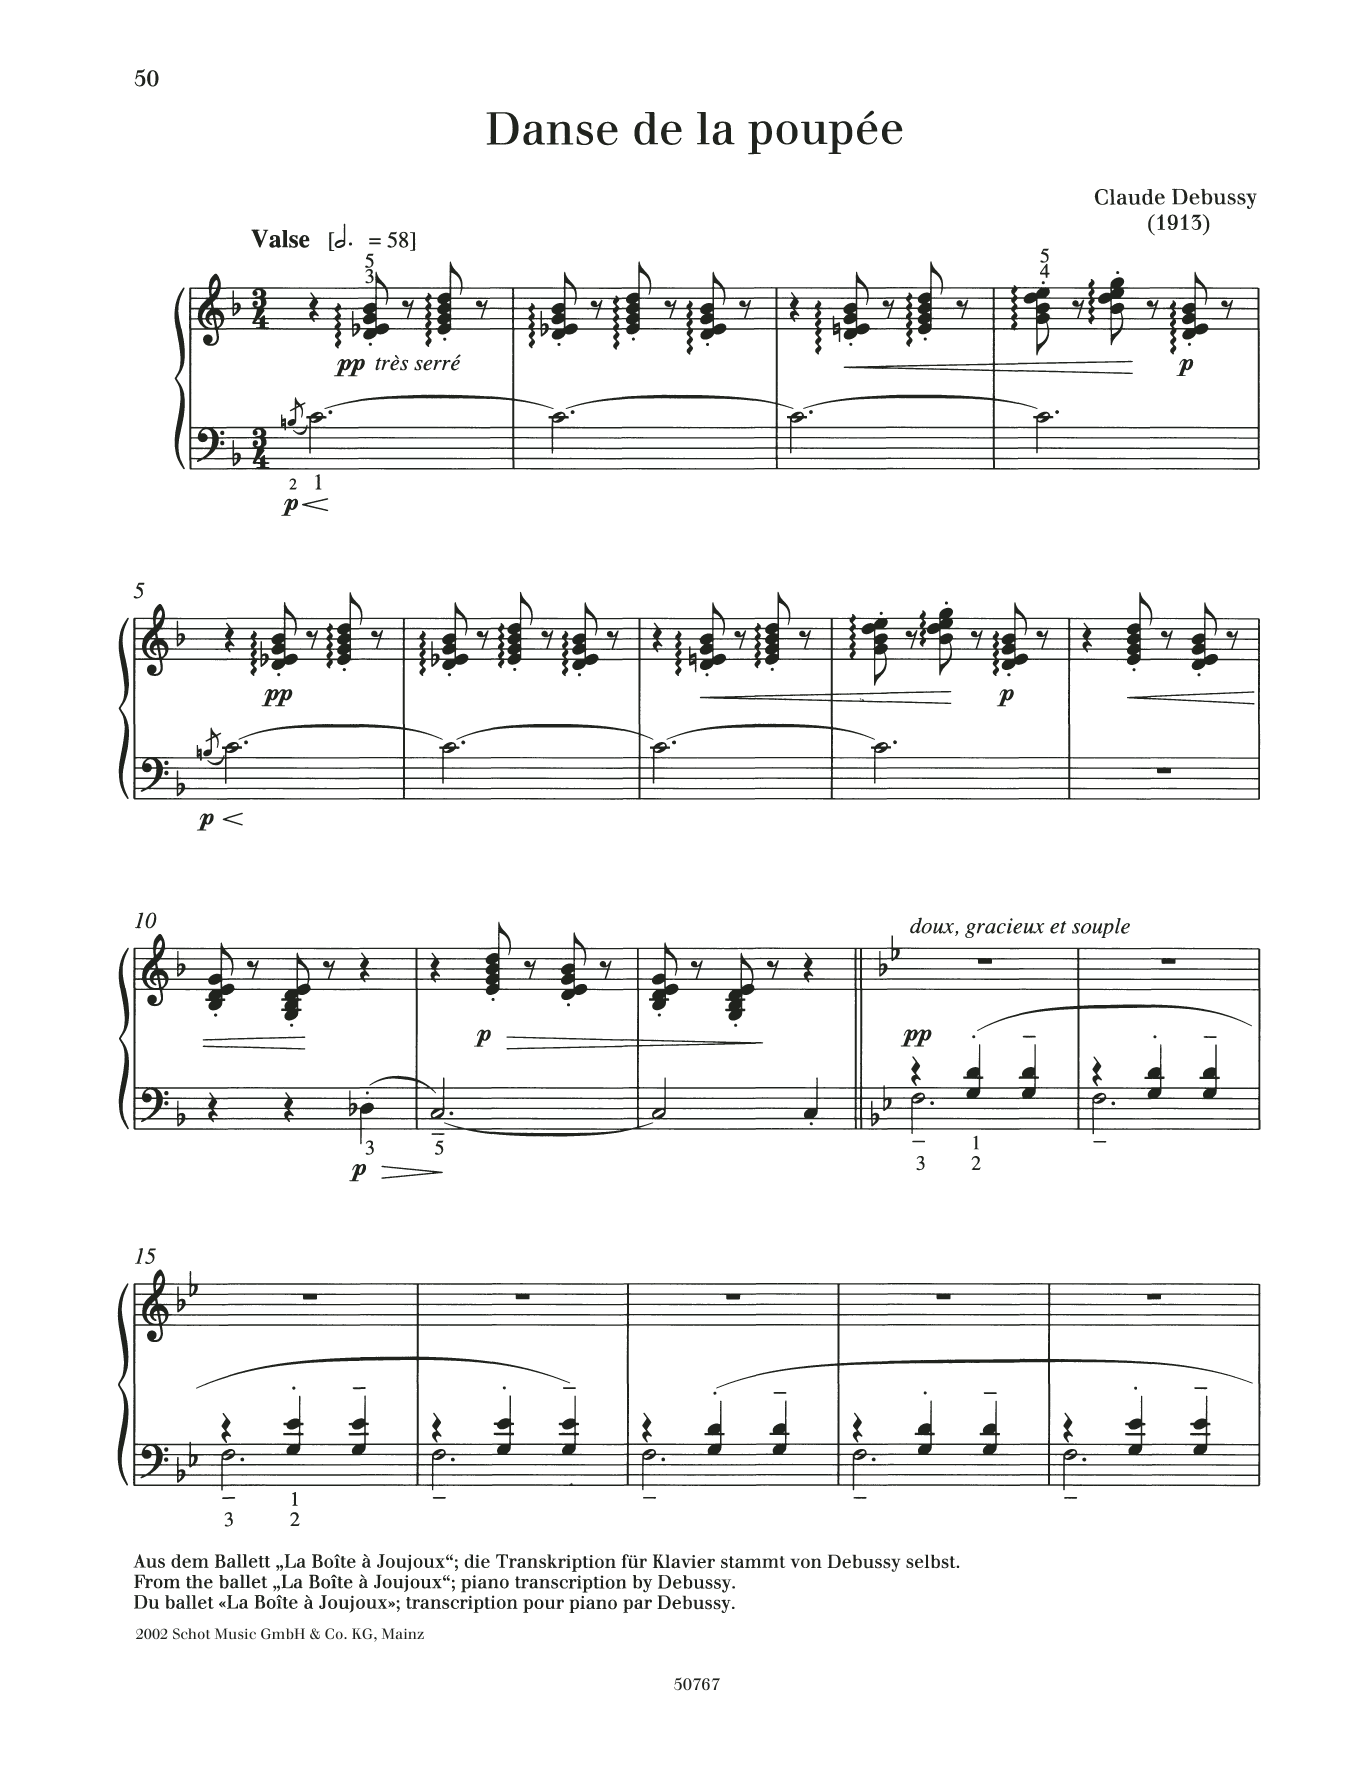 Claude Debussy Danse de la poupee Sheet Music Notes & Chords for Piano Solo - Download or Print PDF